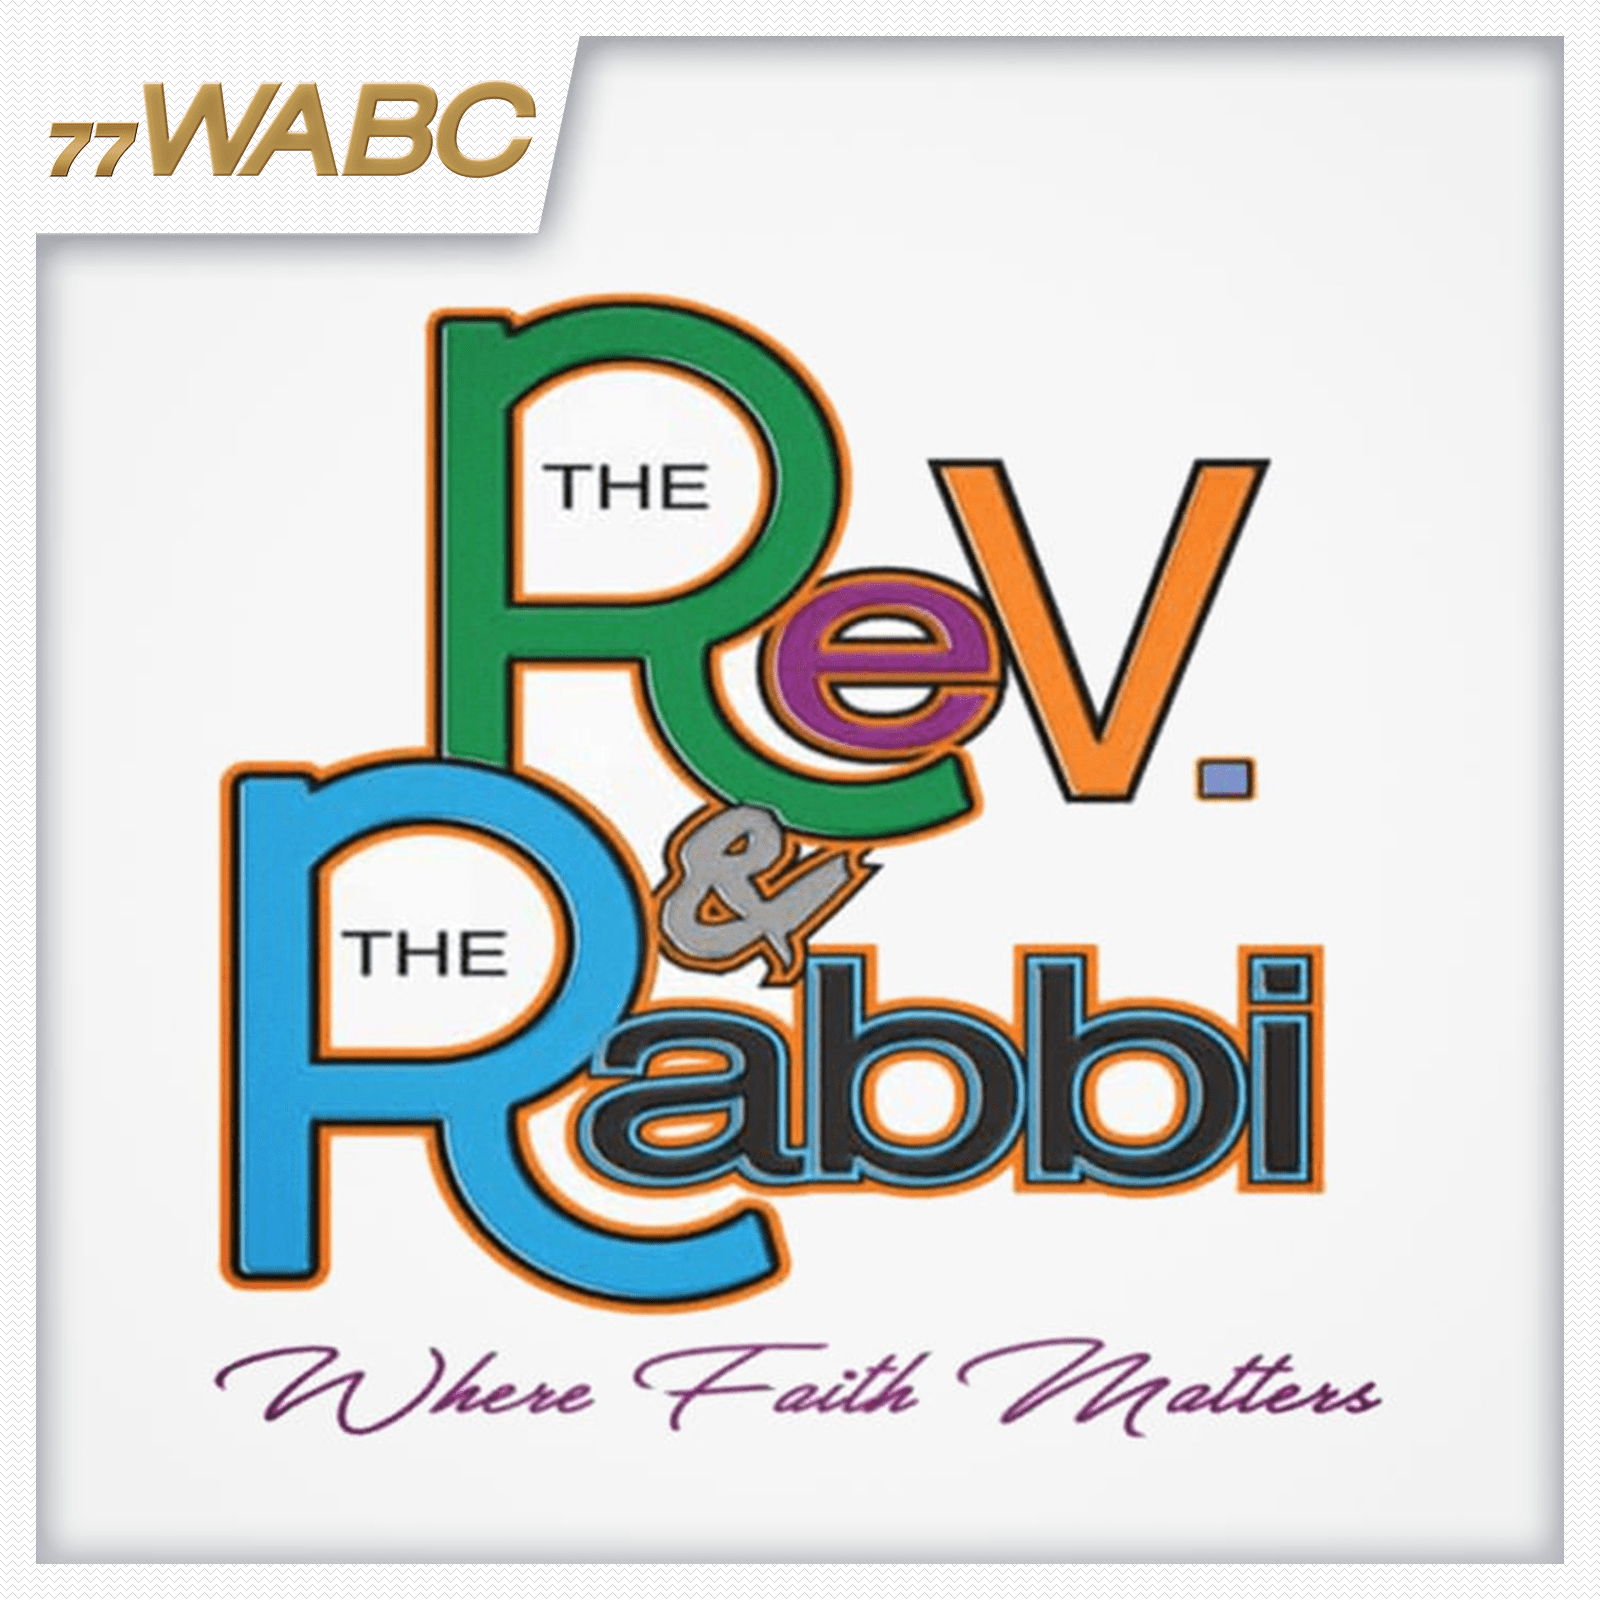 rev-and-the-rabbi-new-logo149316